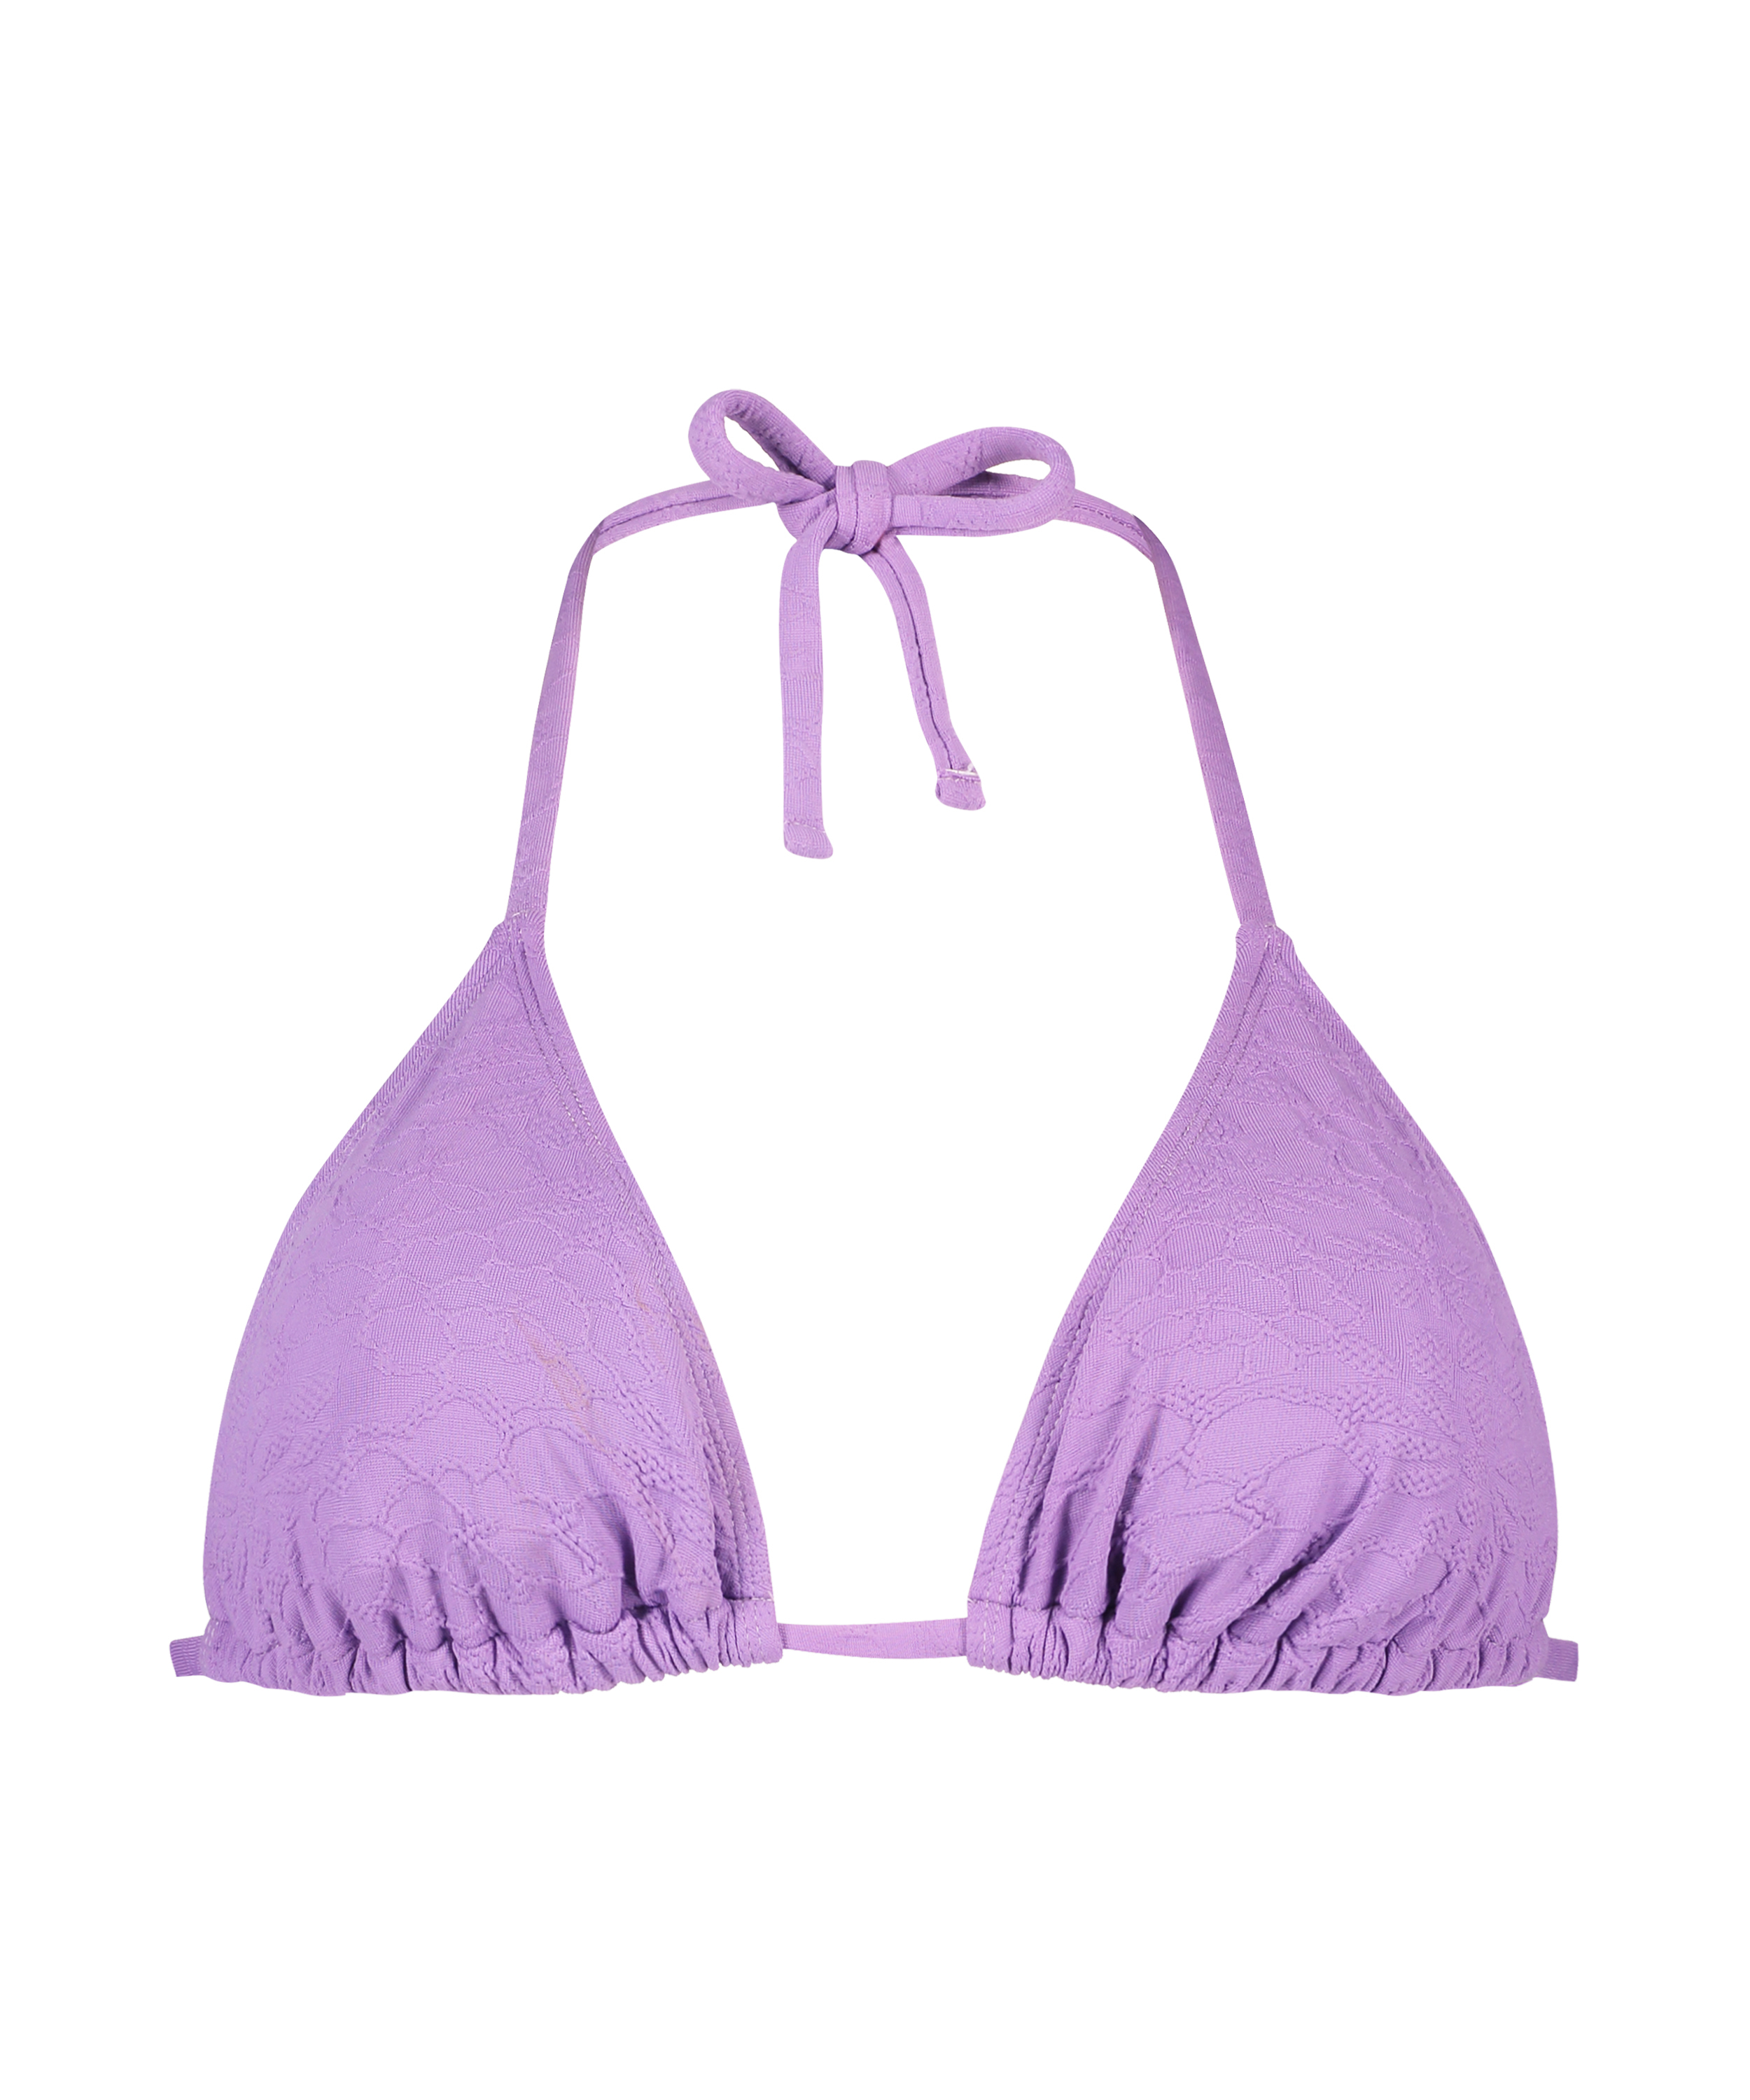 Libby triangle bikini top for £27 - New Arrivals - Hunkemöller